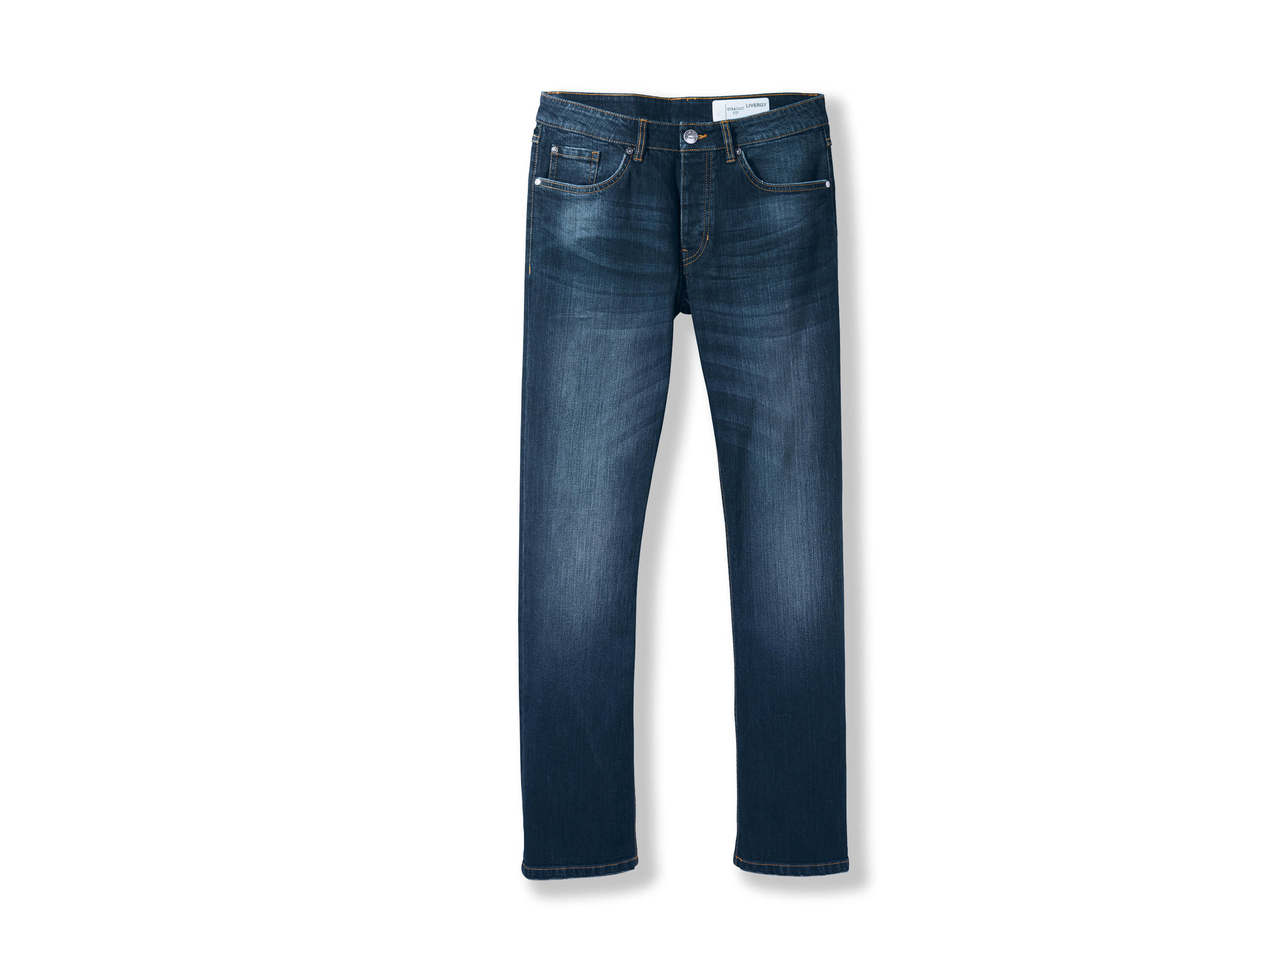 LIVERGY(R) Jeans